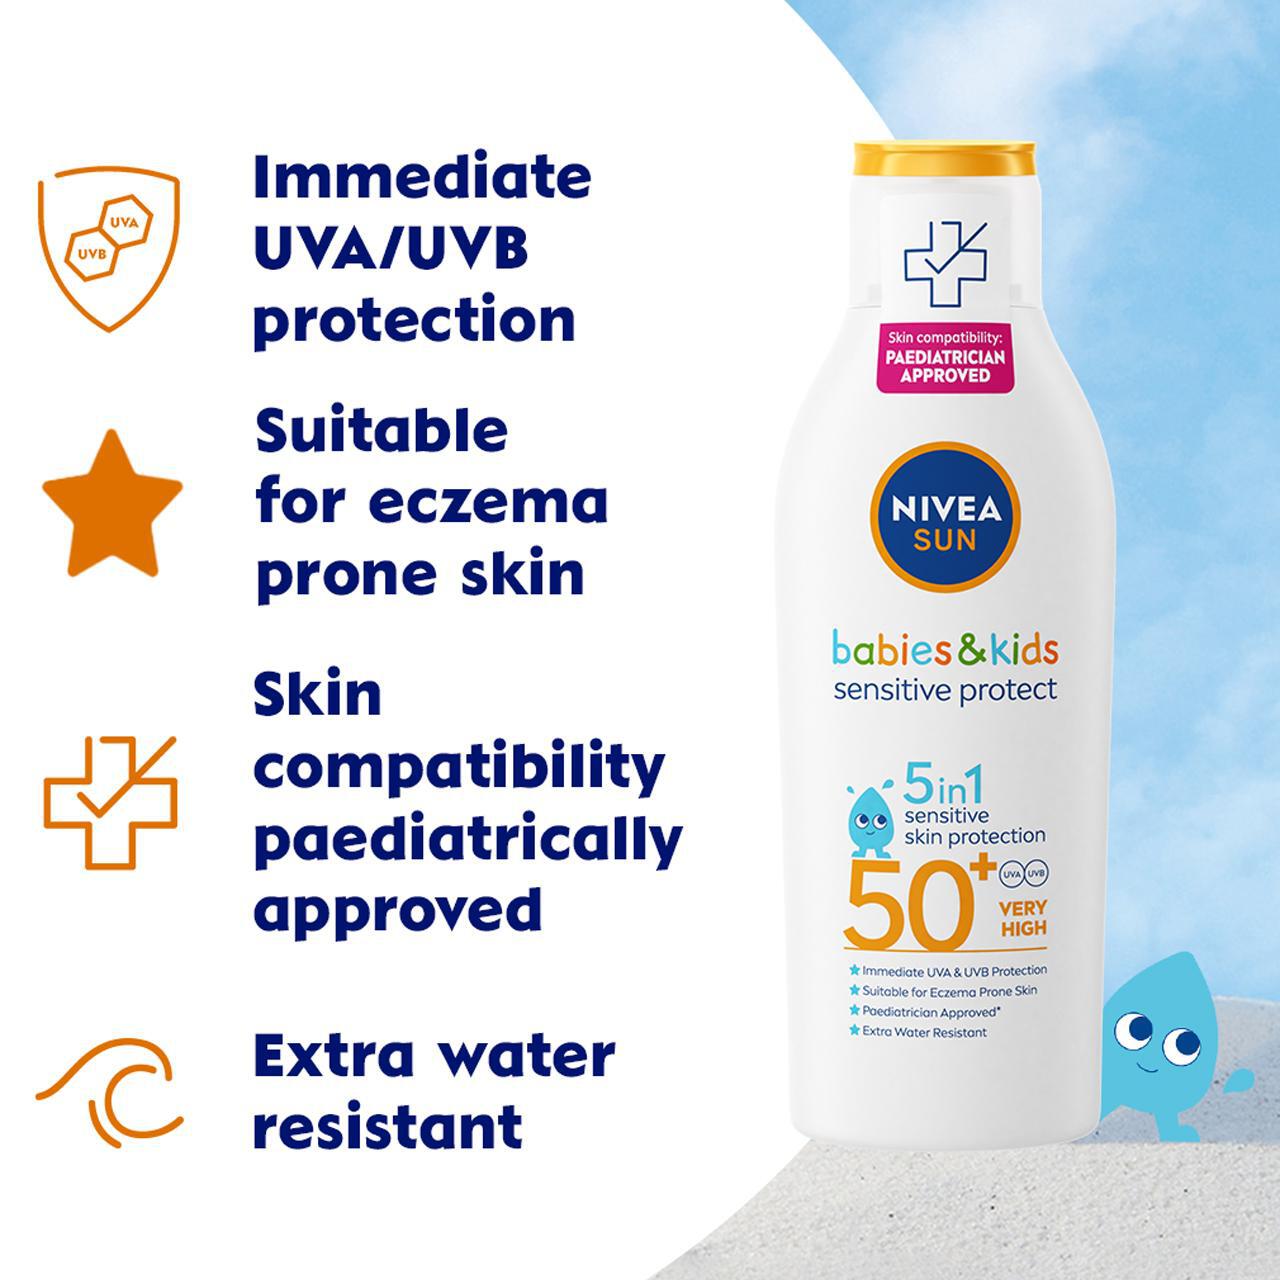 NIVEA SUN Kids Sensitive Protect SPF 50+ Sun Lotion 200ml